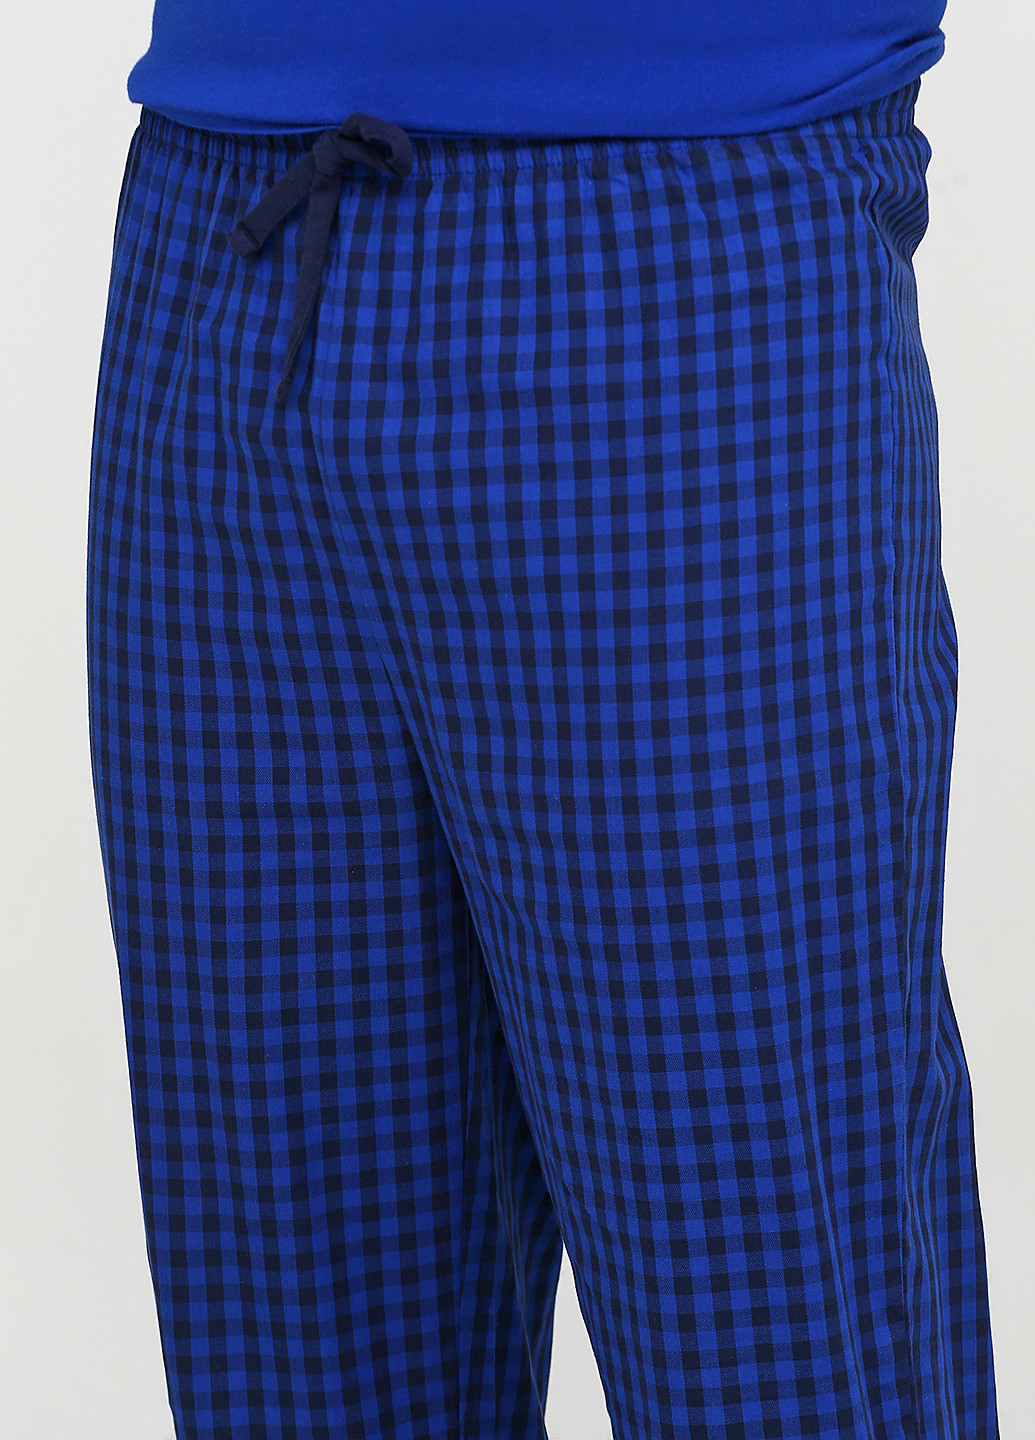 Пижама (лонгслив, брюки) C&A лонгслив + брюки клетка синяя домашняя трикотаж, хлопок